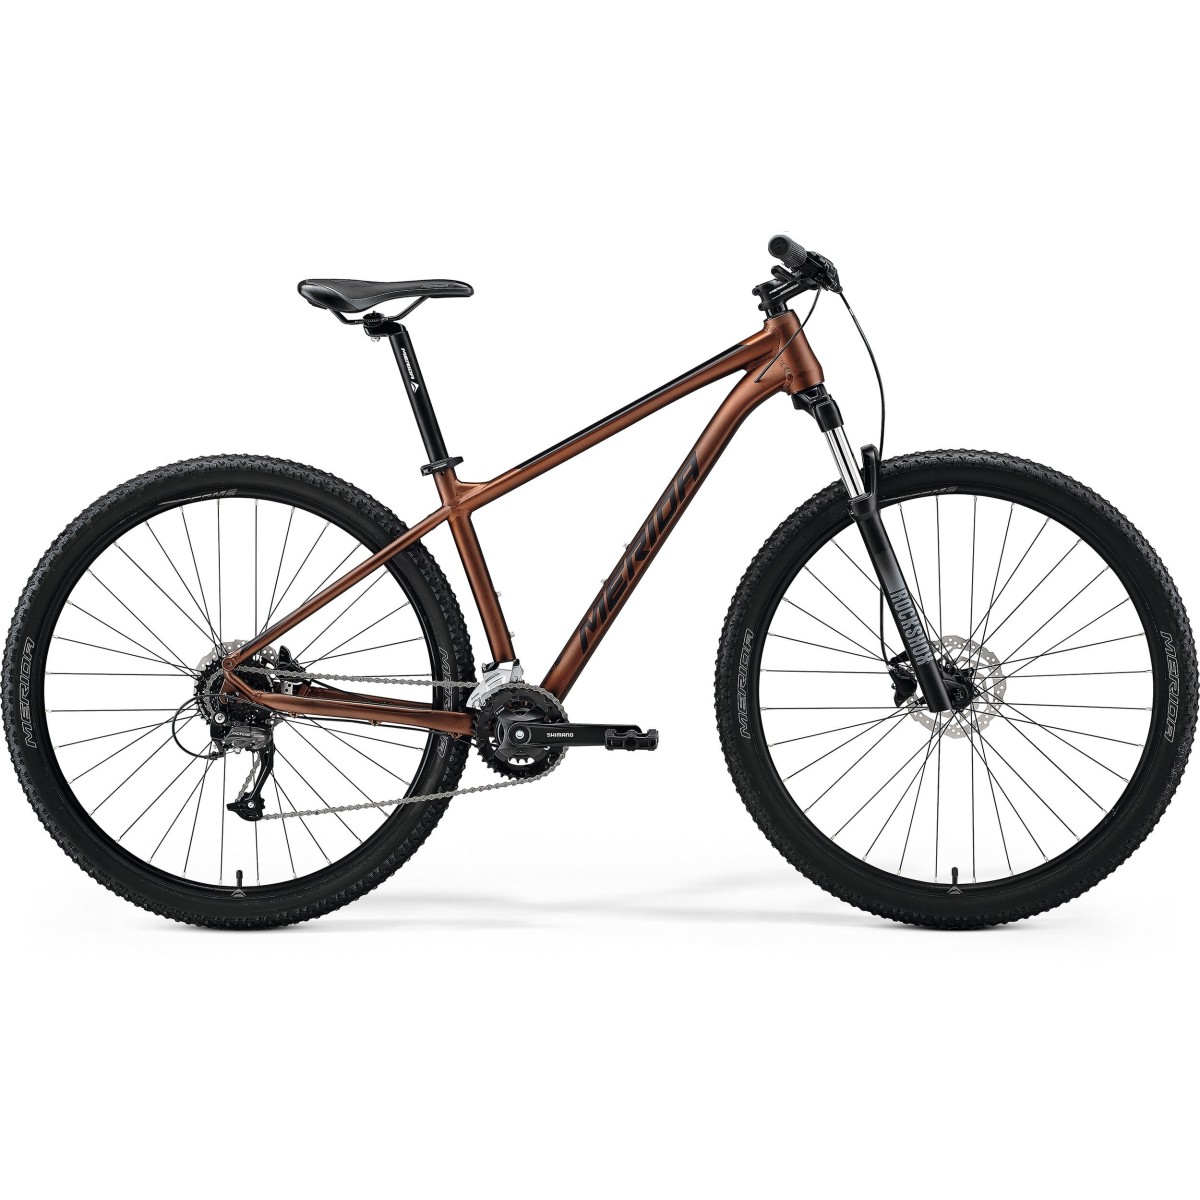 MERIDA BIG SEVEN 60-2X bicycle - brown